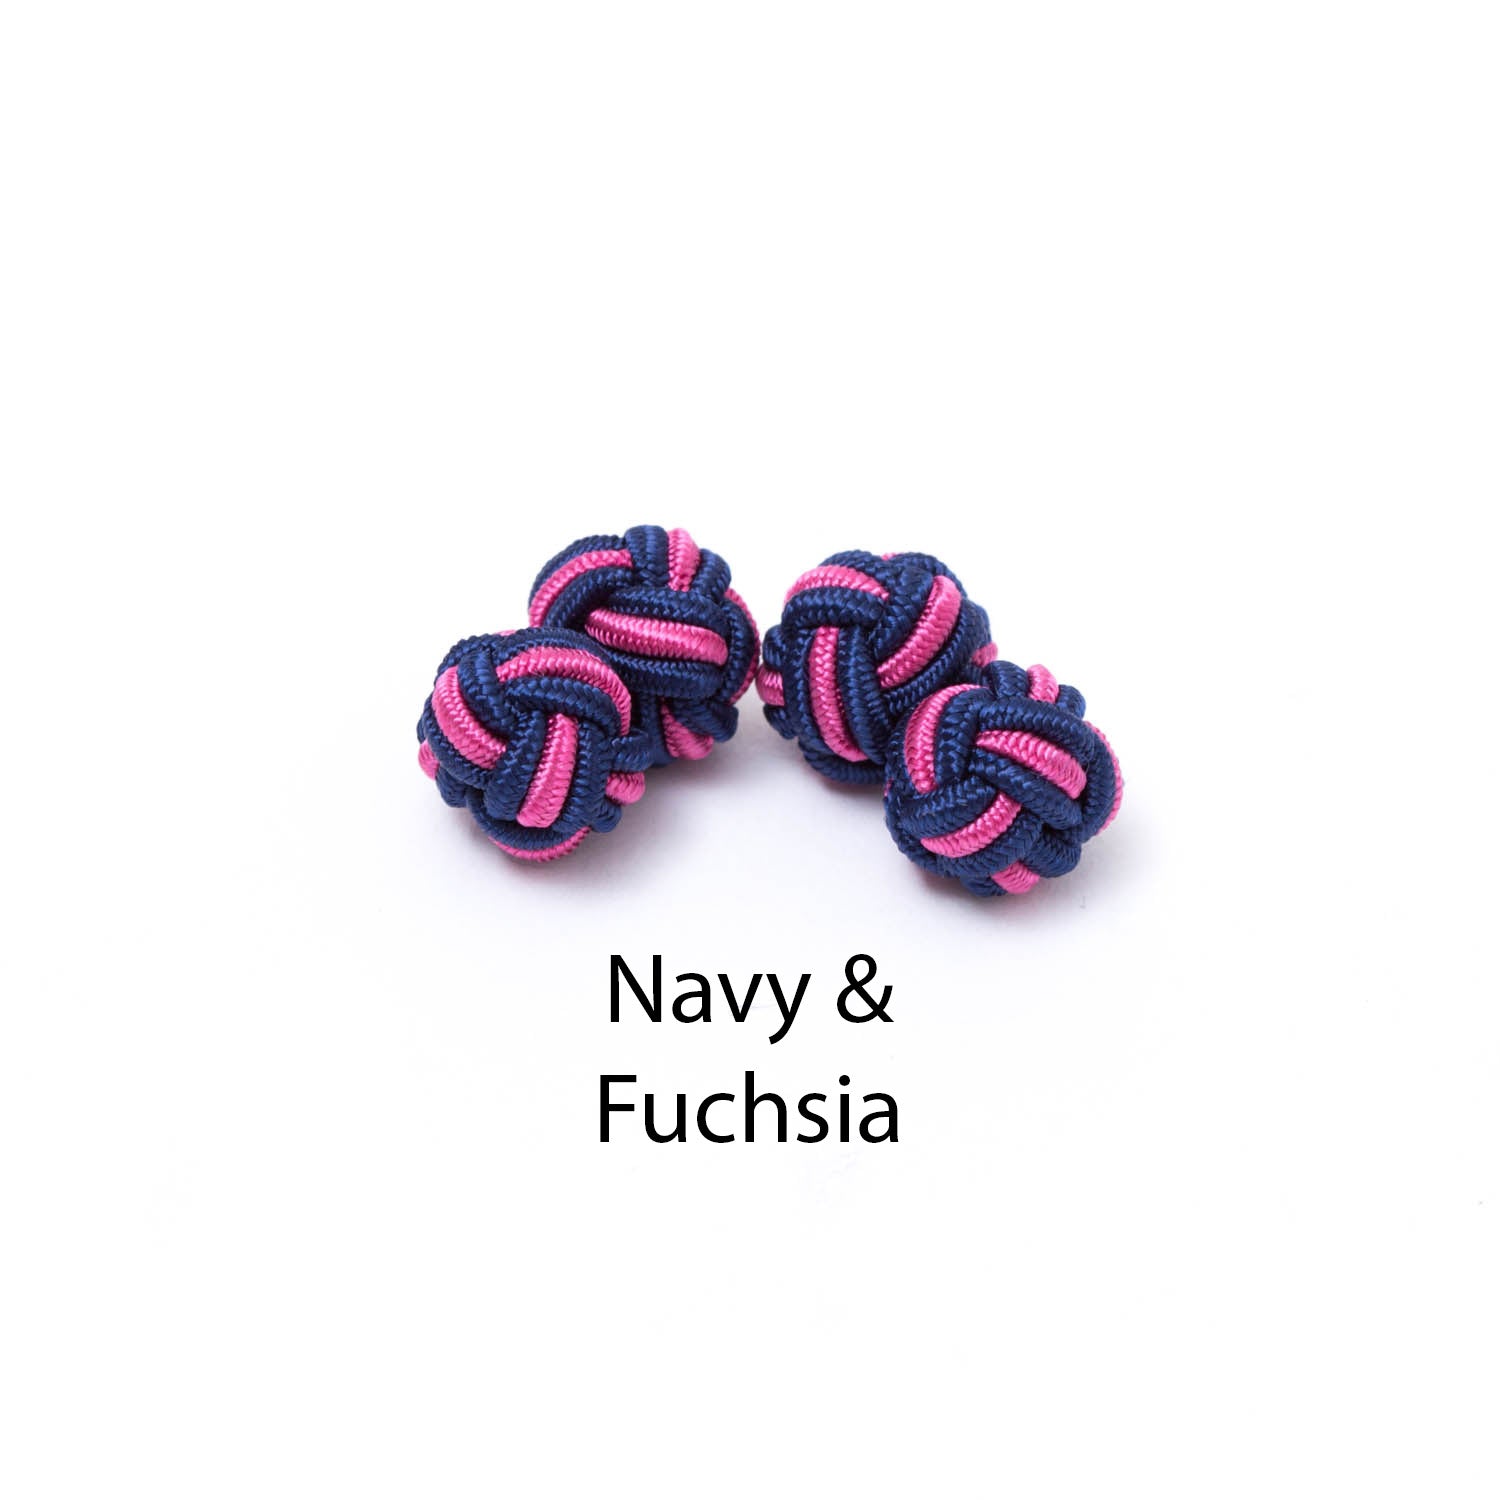 Navy Dual Colored Knot Cufflinks from KirbyAllison.com.